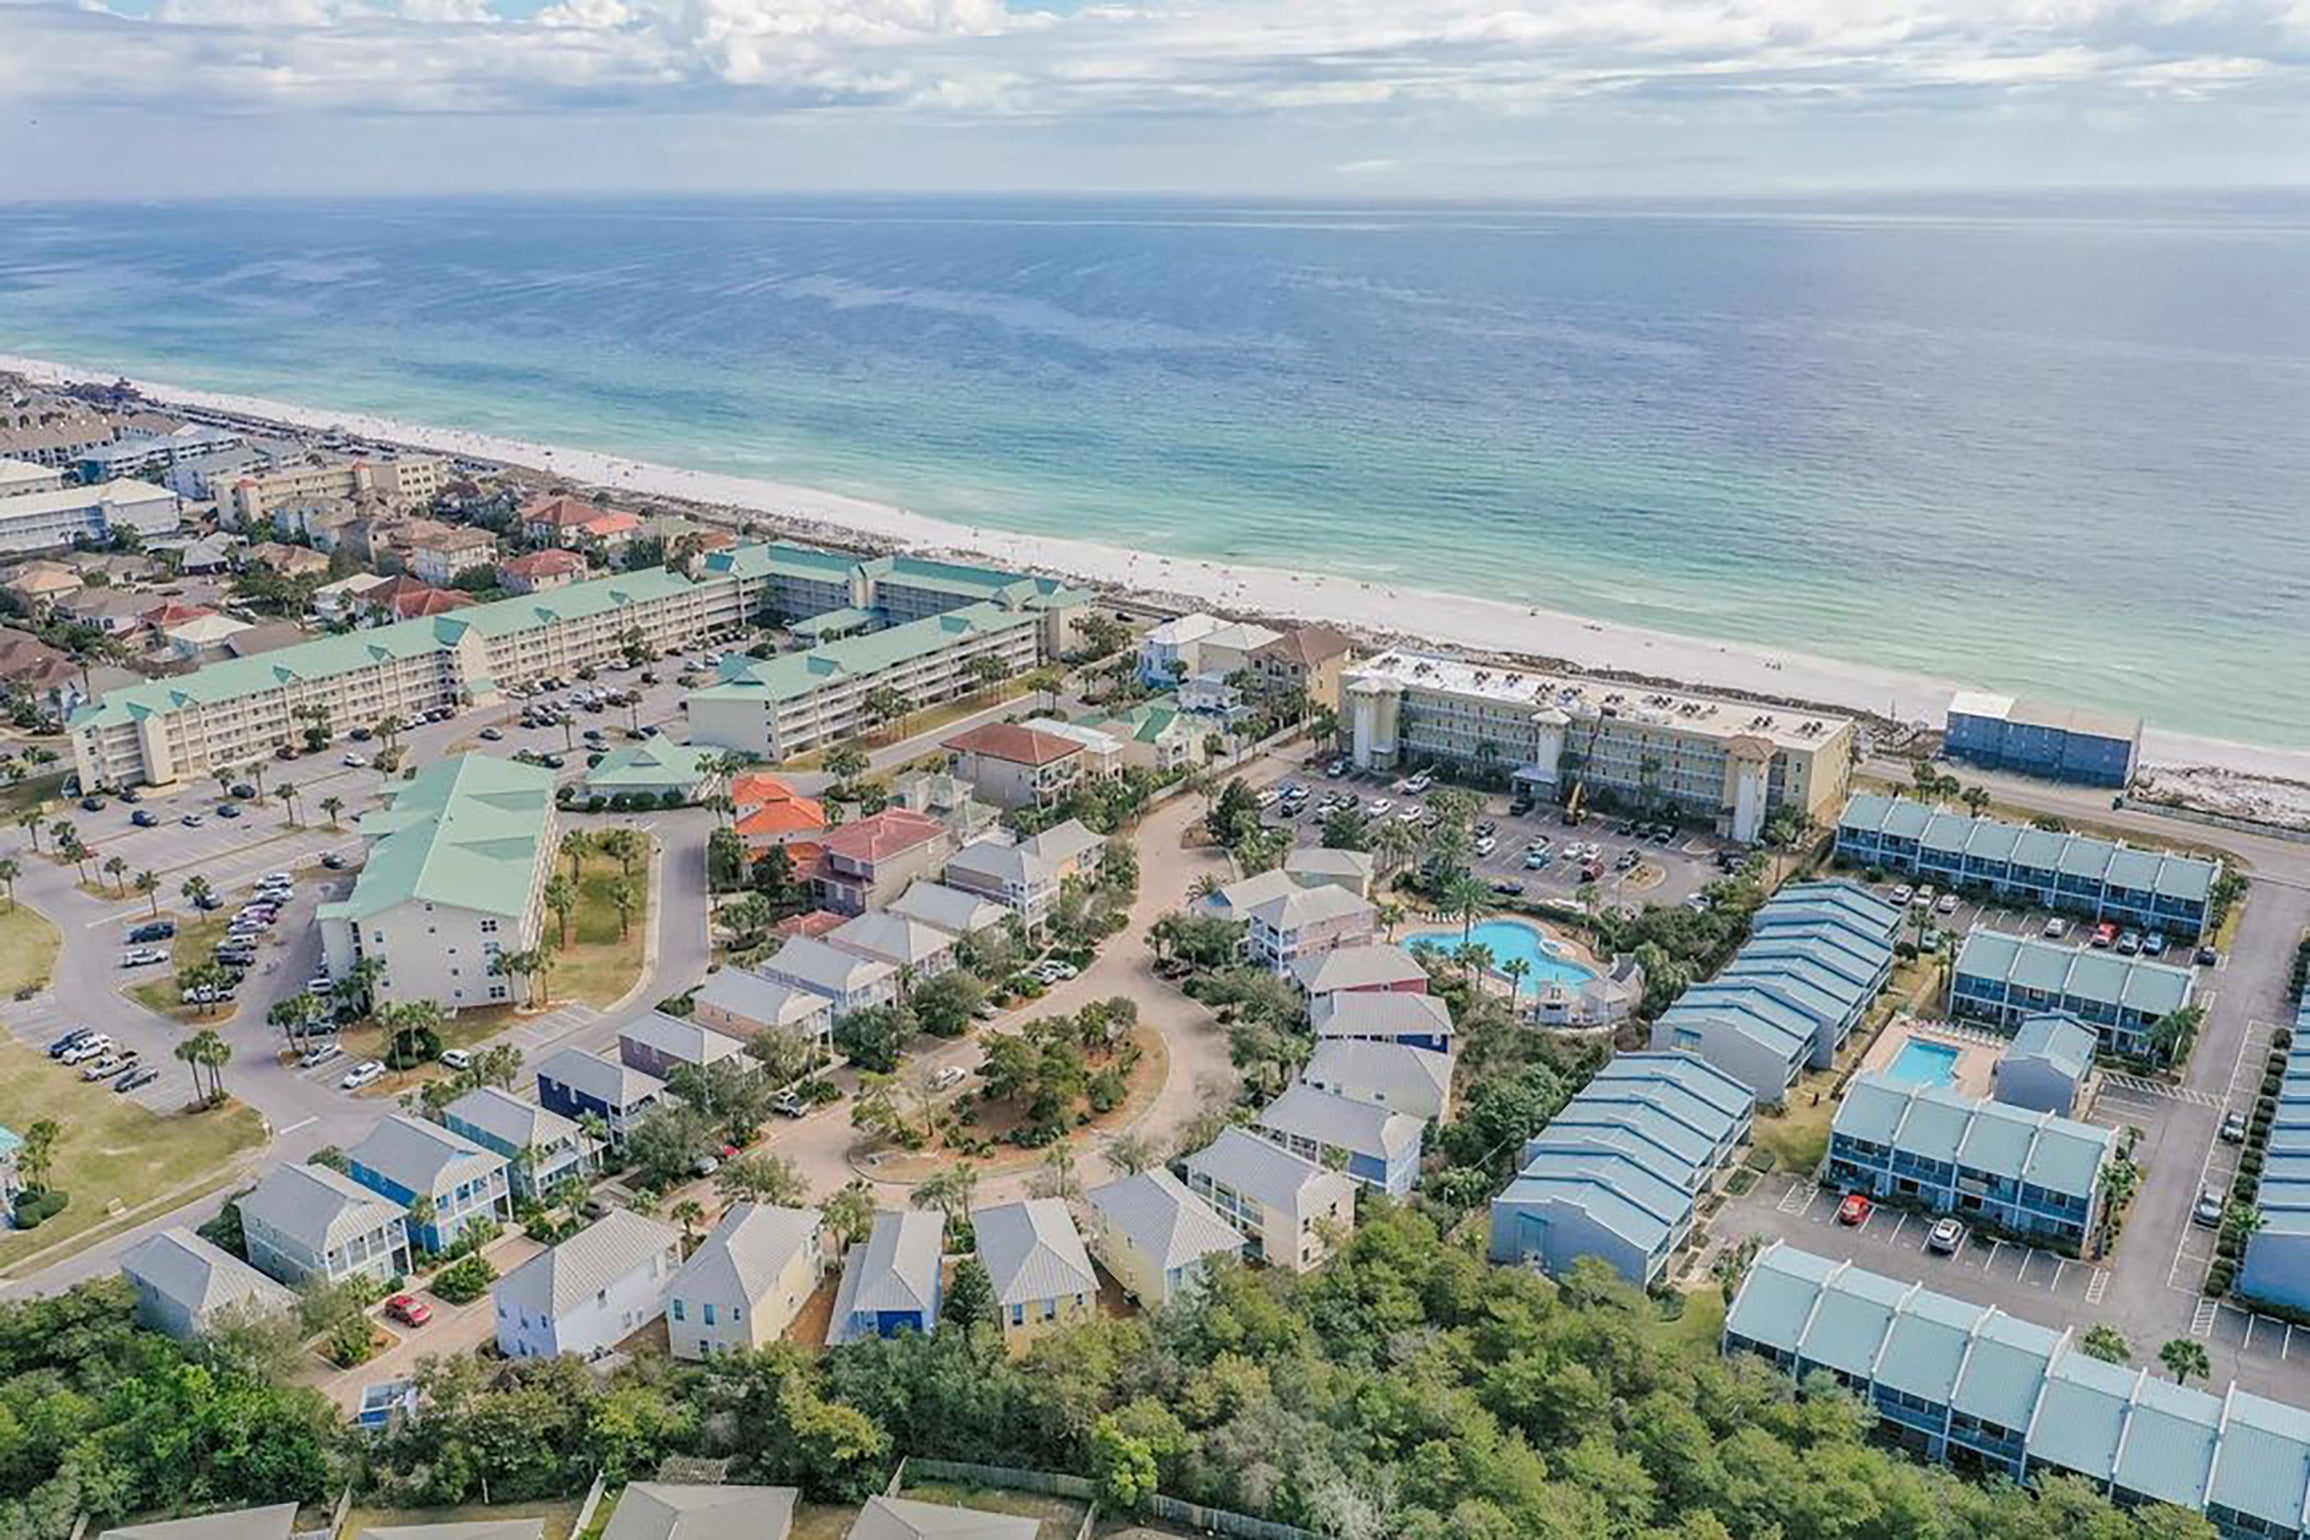 Aerial view of Beach Retreat neighborhood